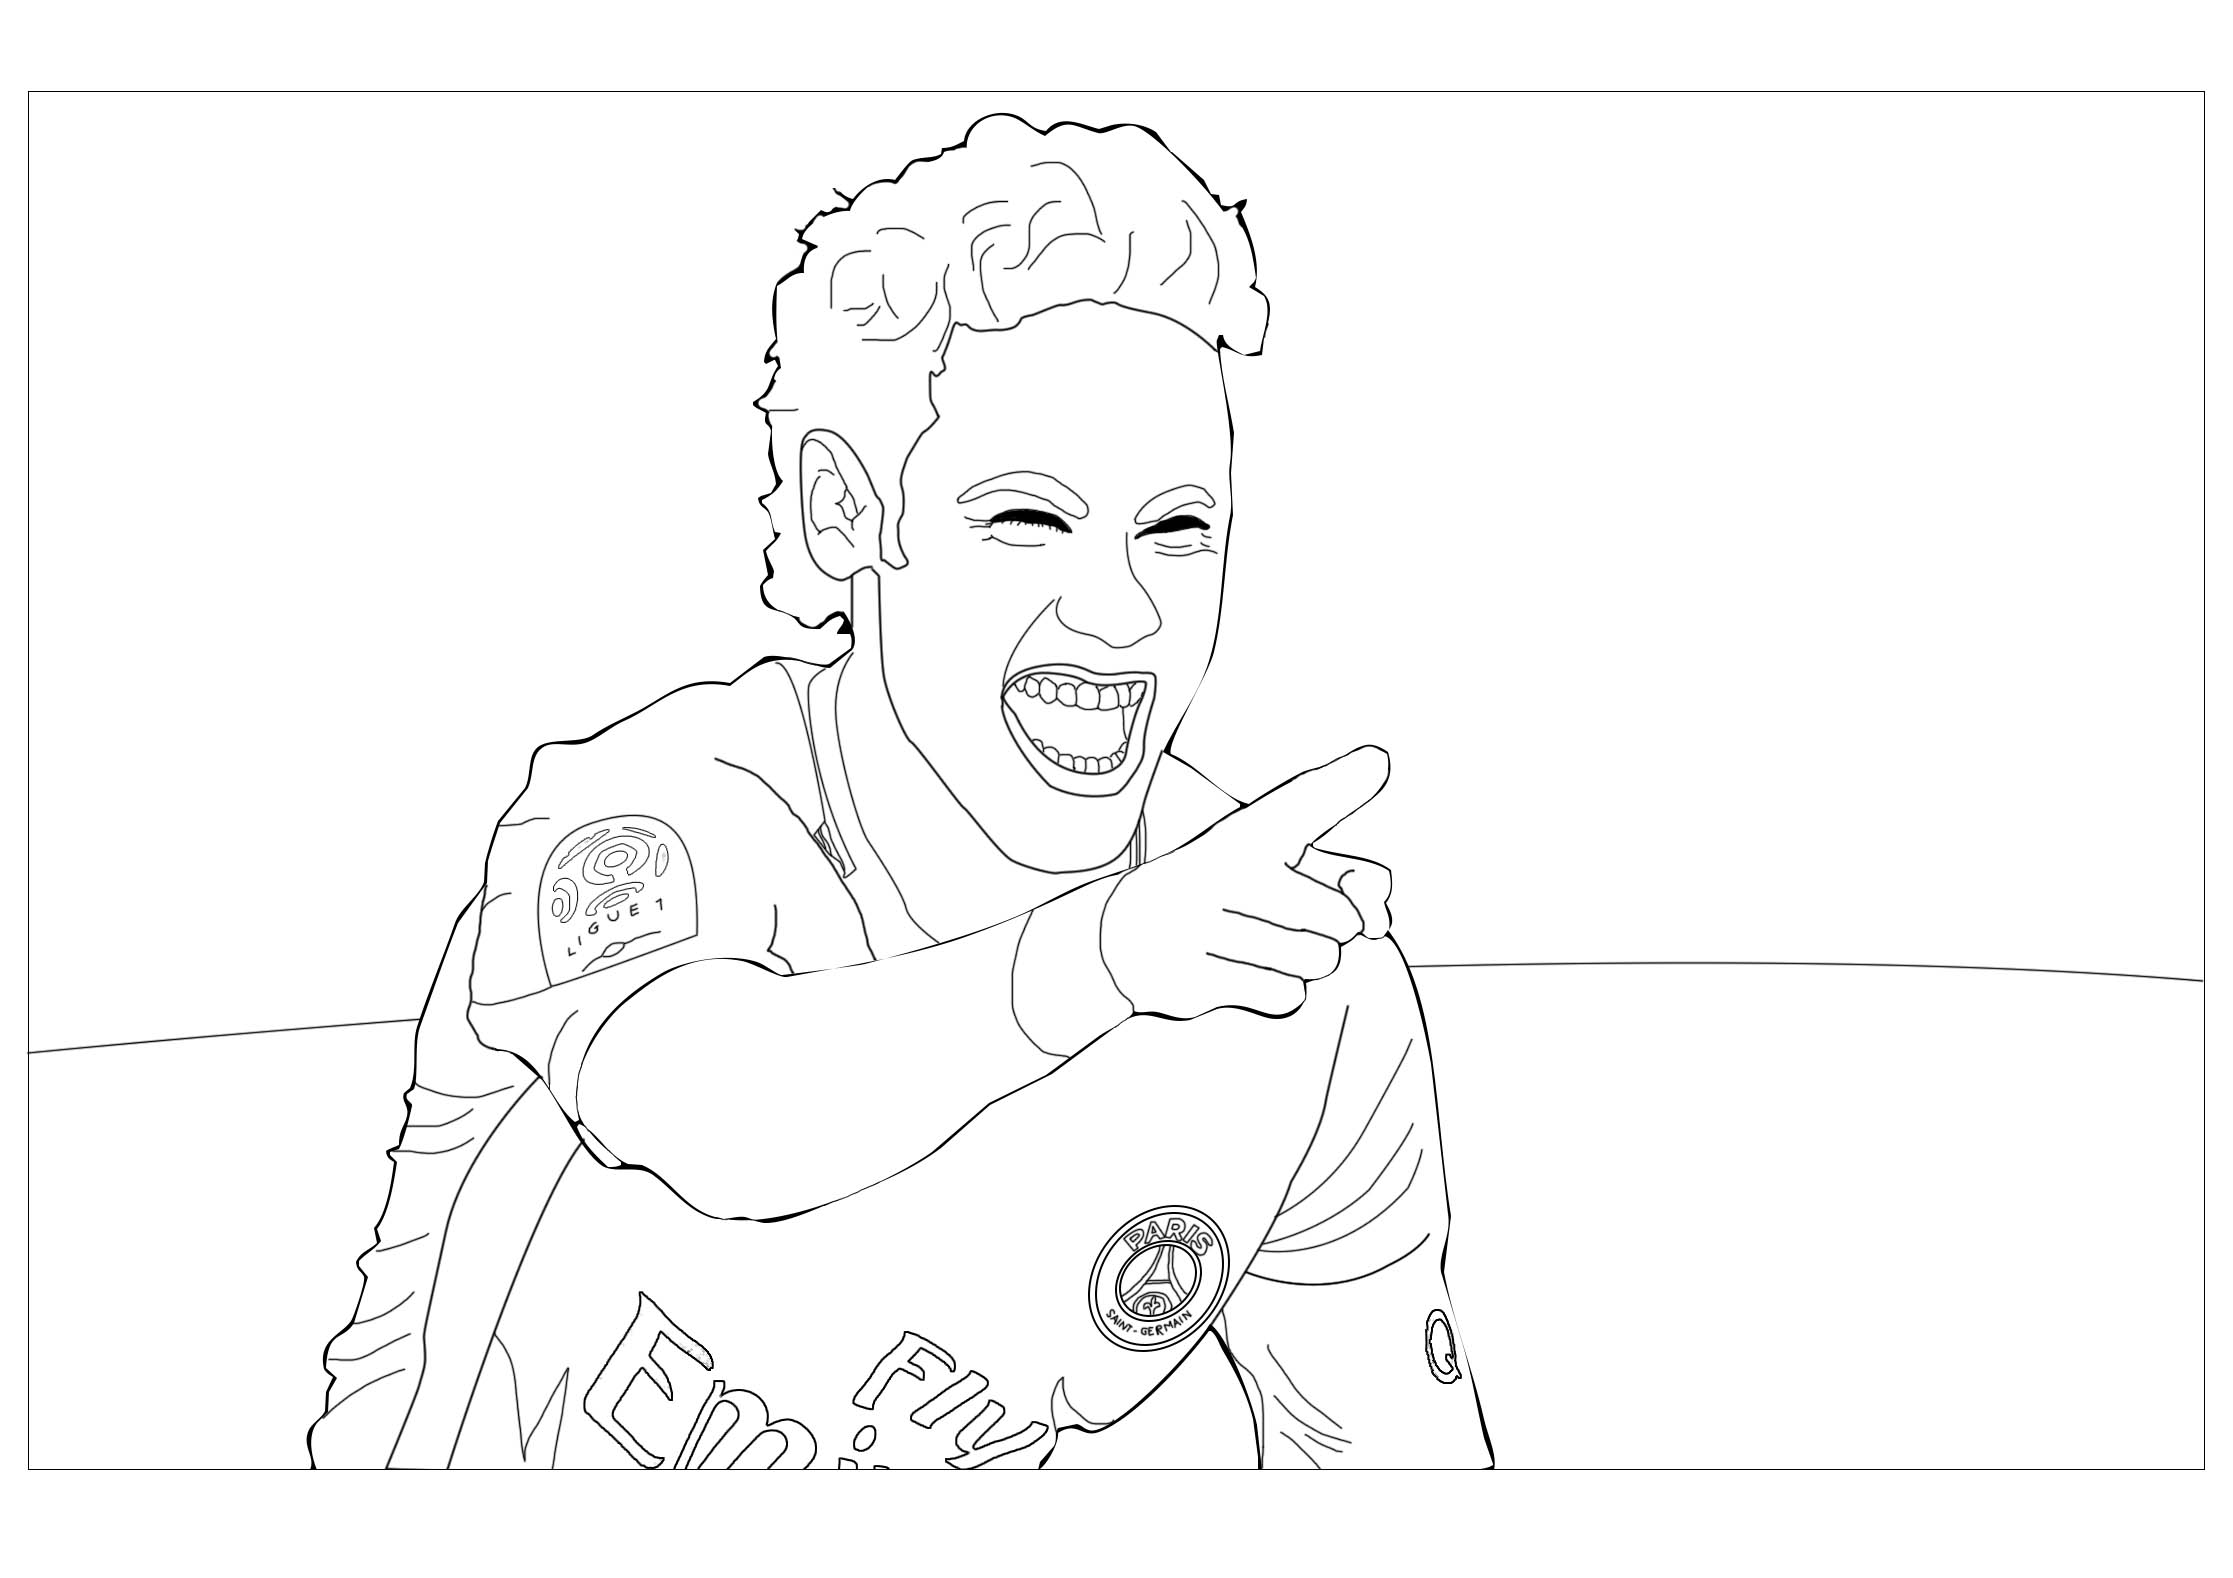 Neymar jr - version - 1 - Soccer Kids Coloring Pages